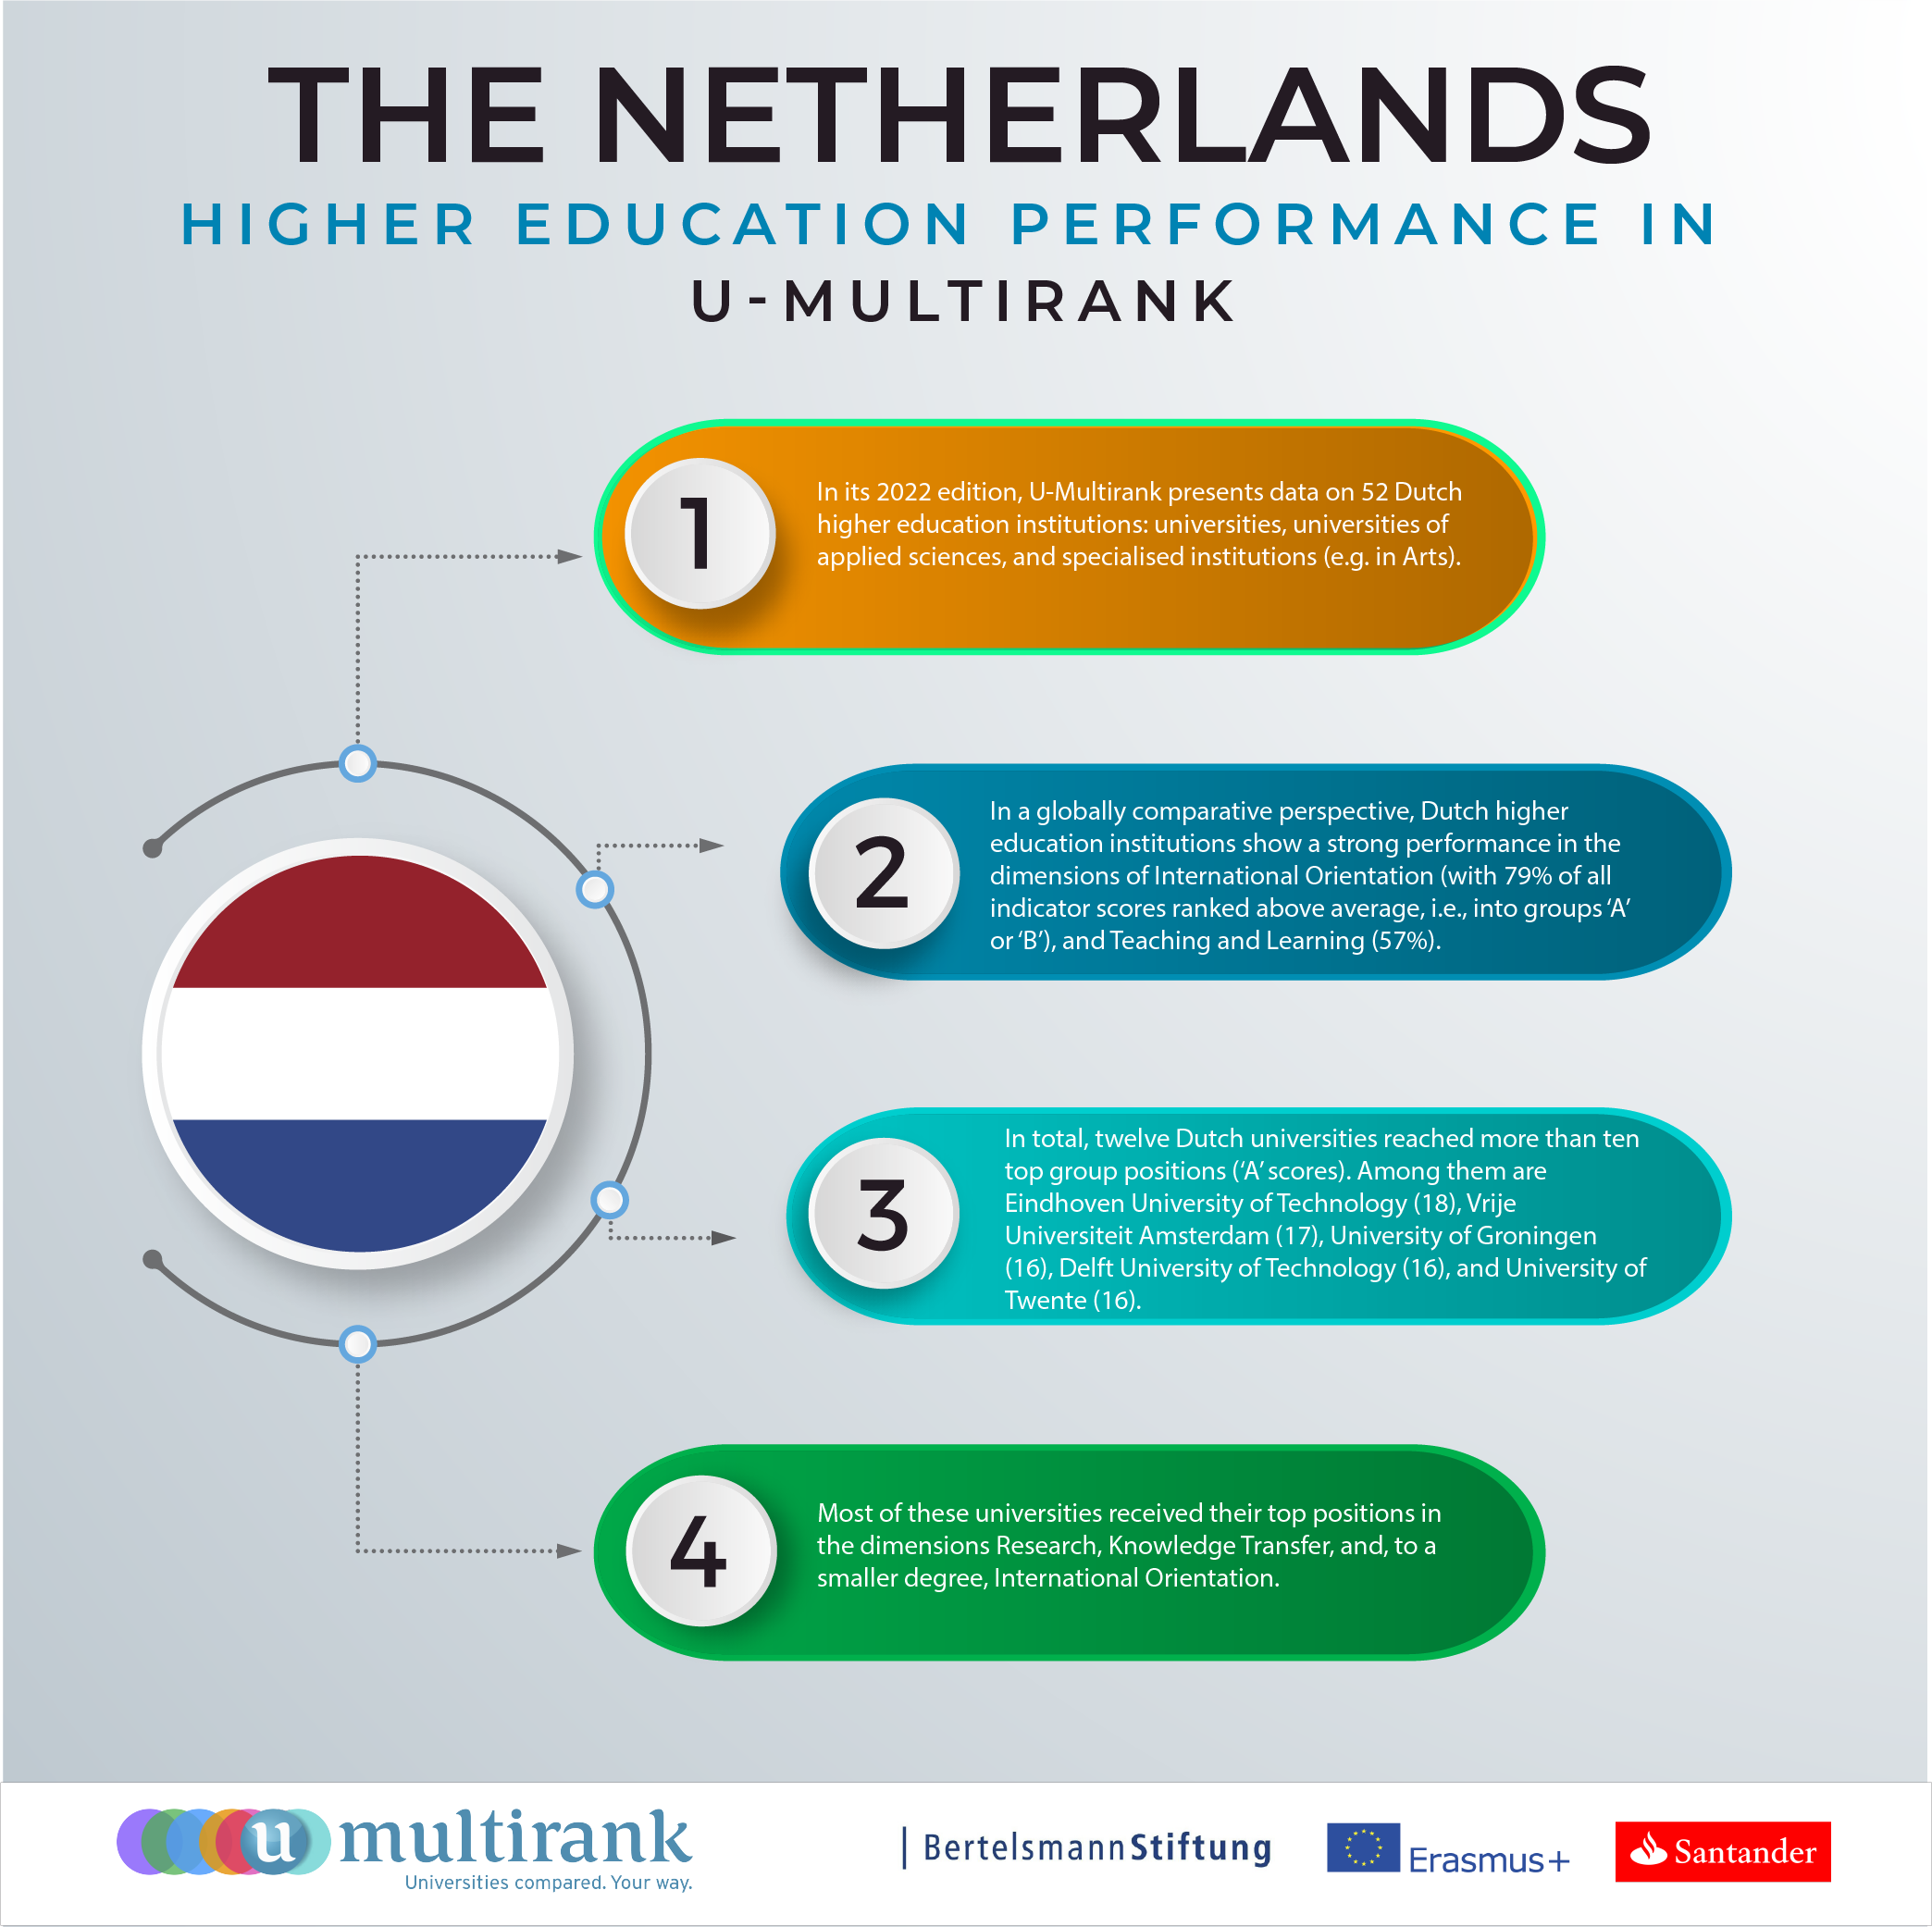 The Netherlands' Higher Education Performance in U-Multirank